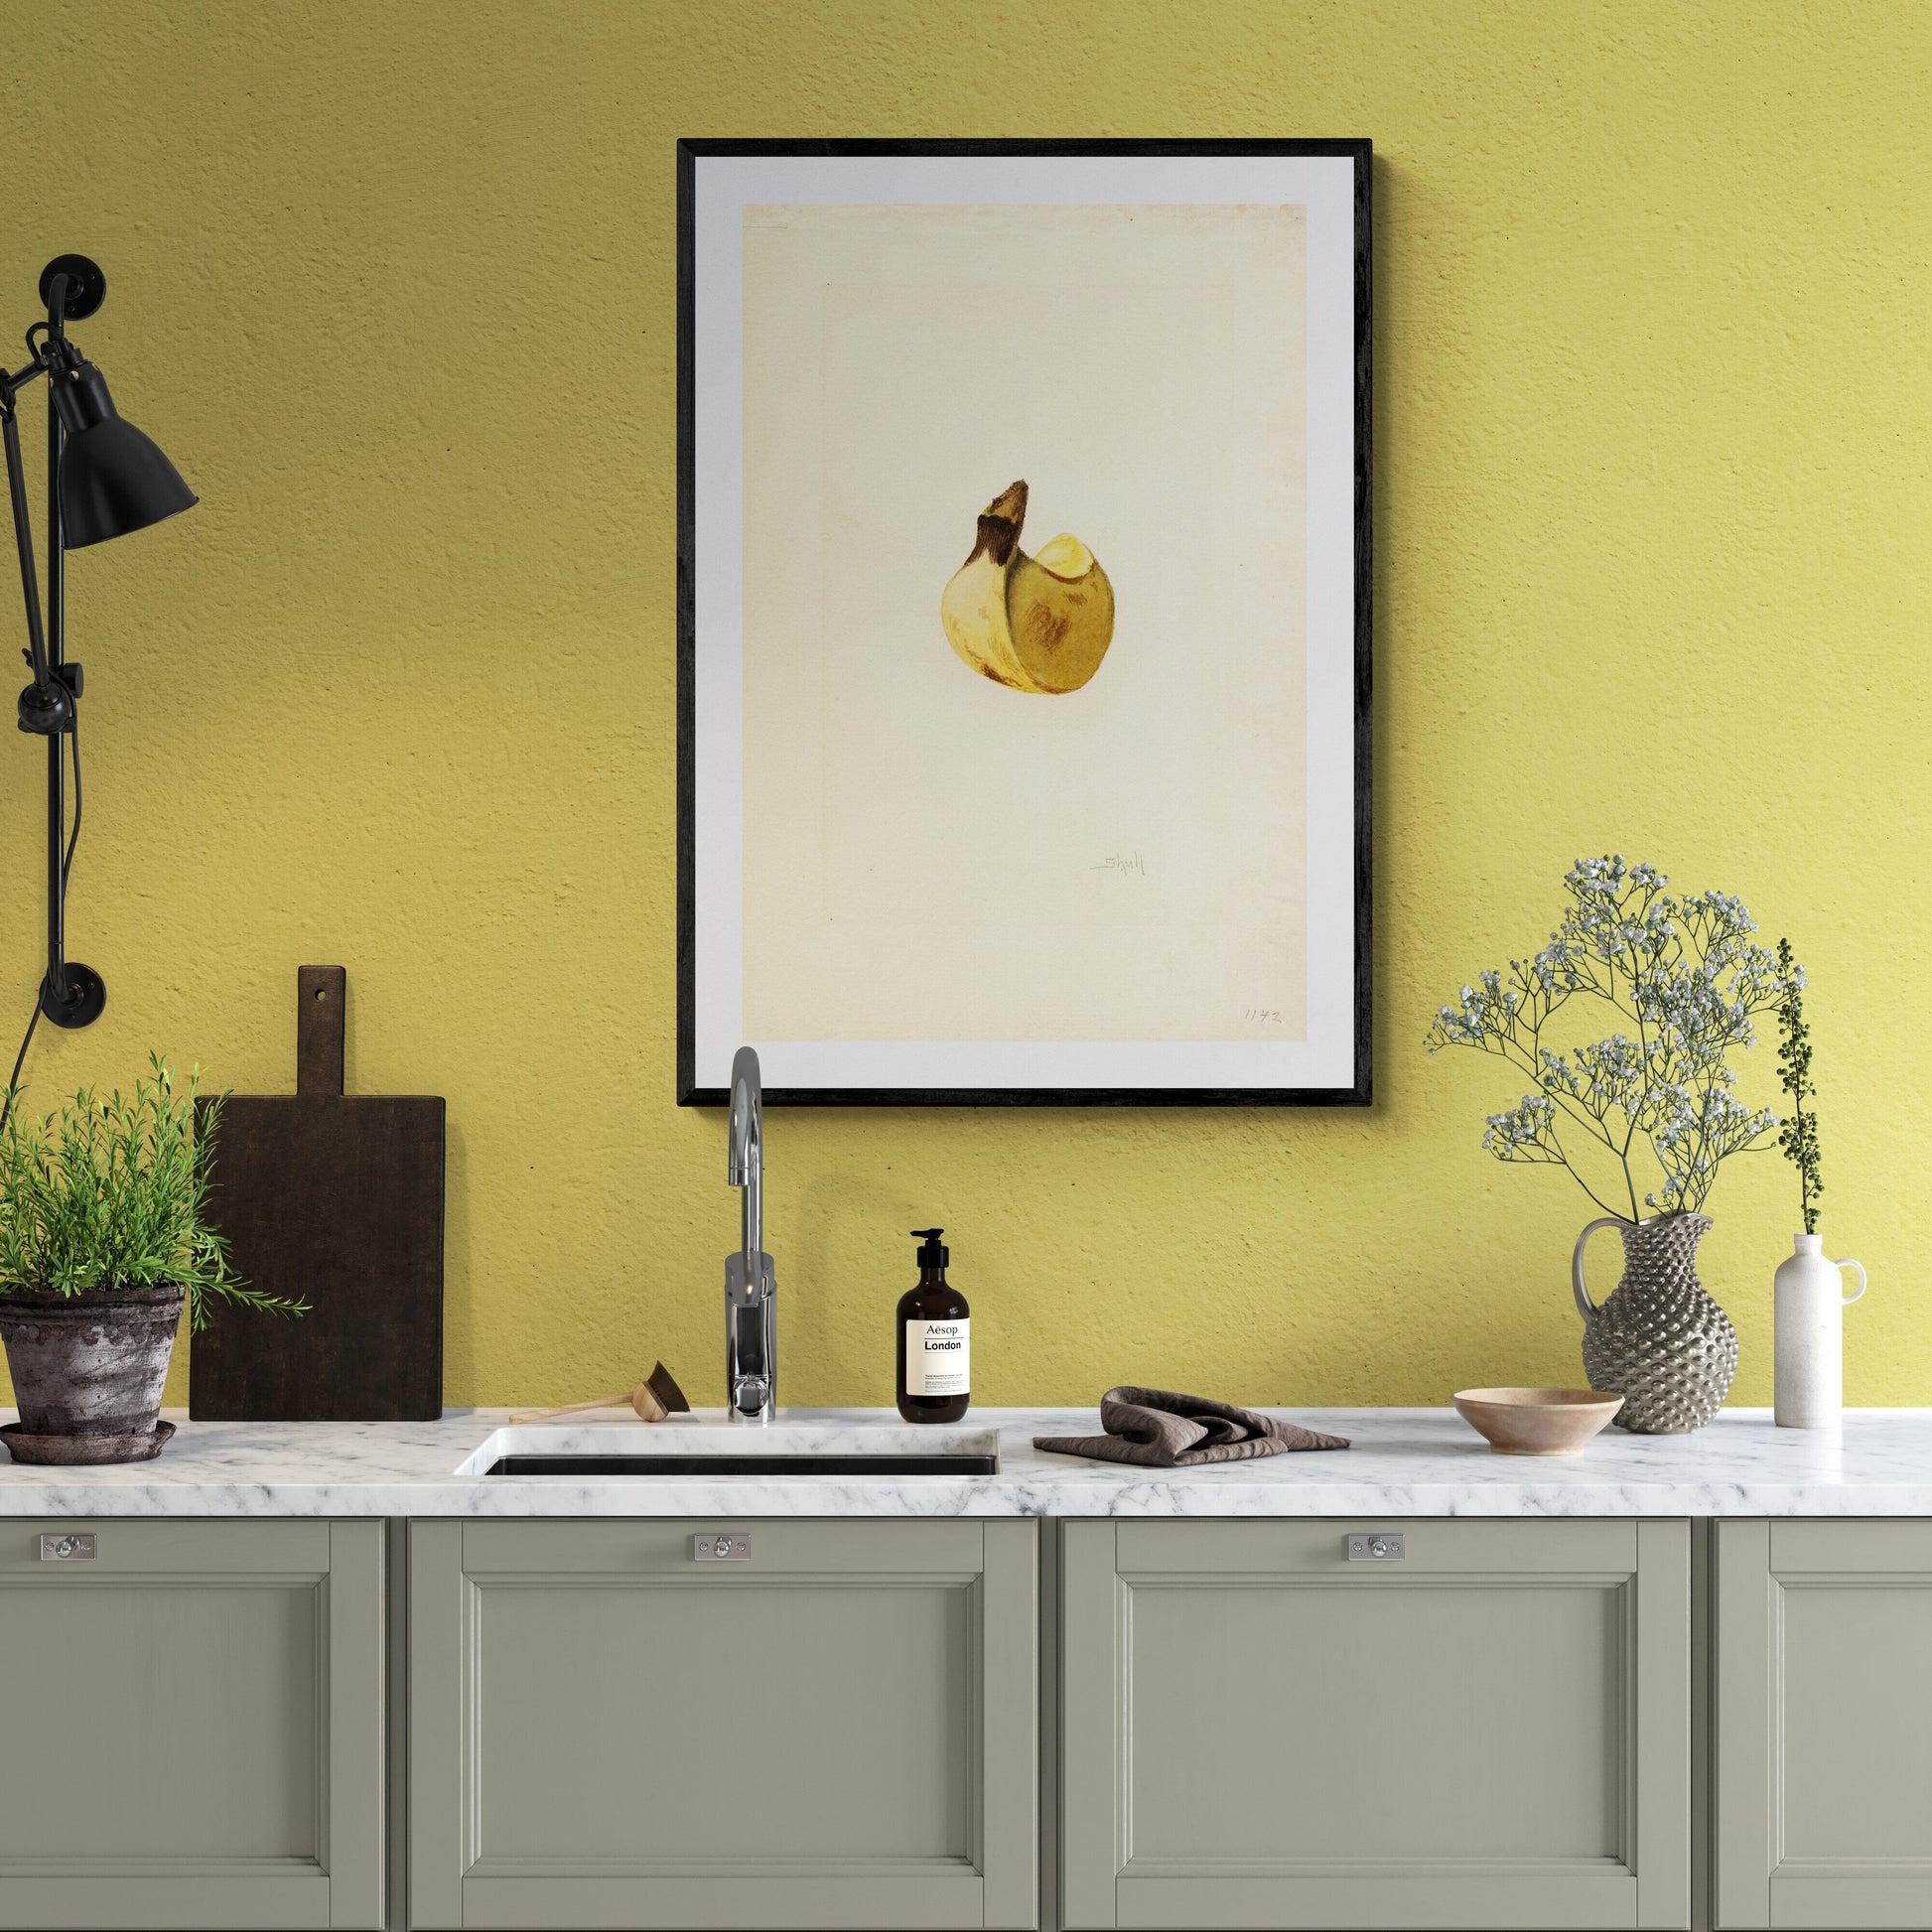 Banana (c1900) | Botanical prints | James Marion Shull Posters, Prints, & Visual Artwork The Trumpet Shop   